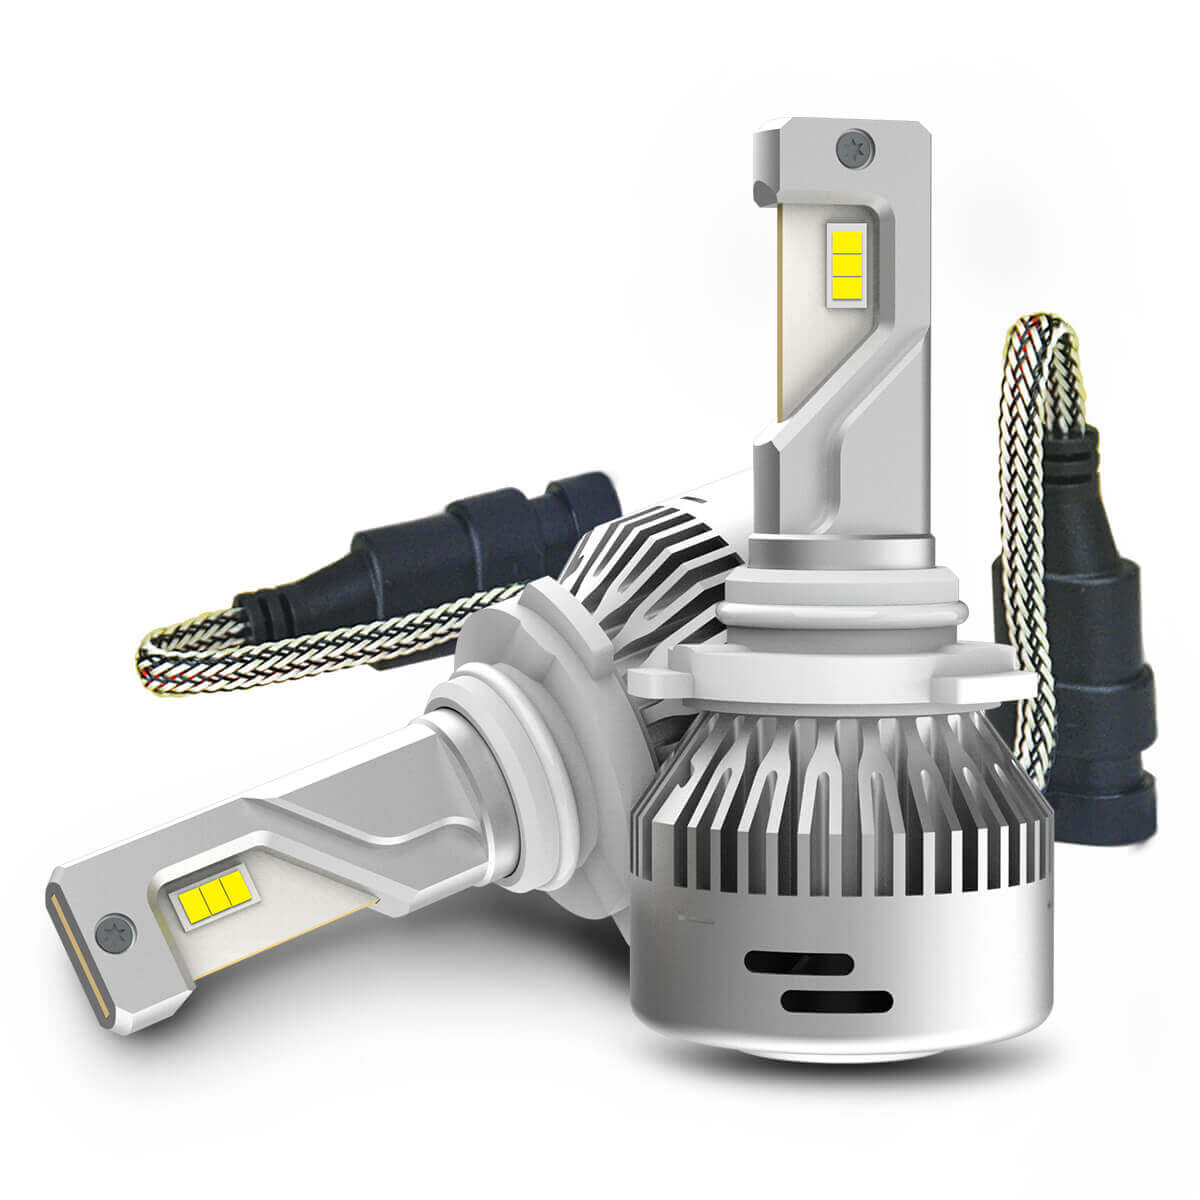 Lasfit 9005 LED Headlight Bulbs,HB3 High Beam Car LED Bulbs,72W 8000LM  6000K White,LSplus Series | 2 Bulbs